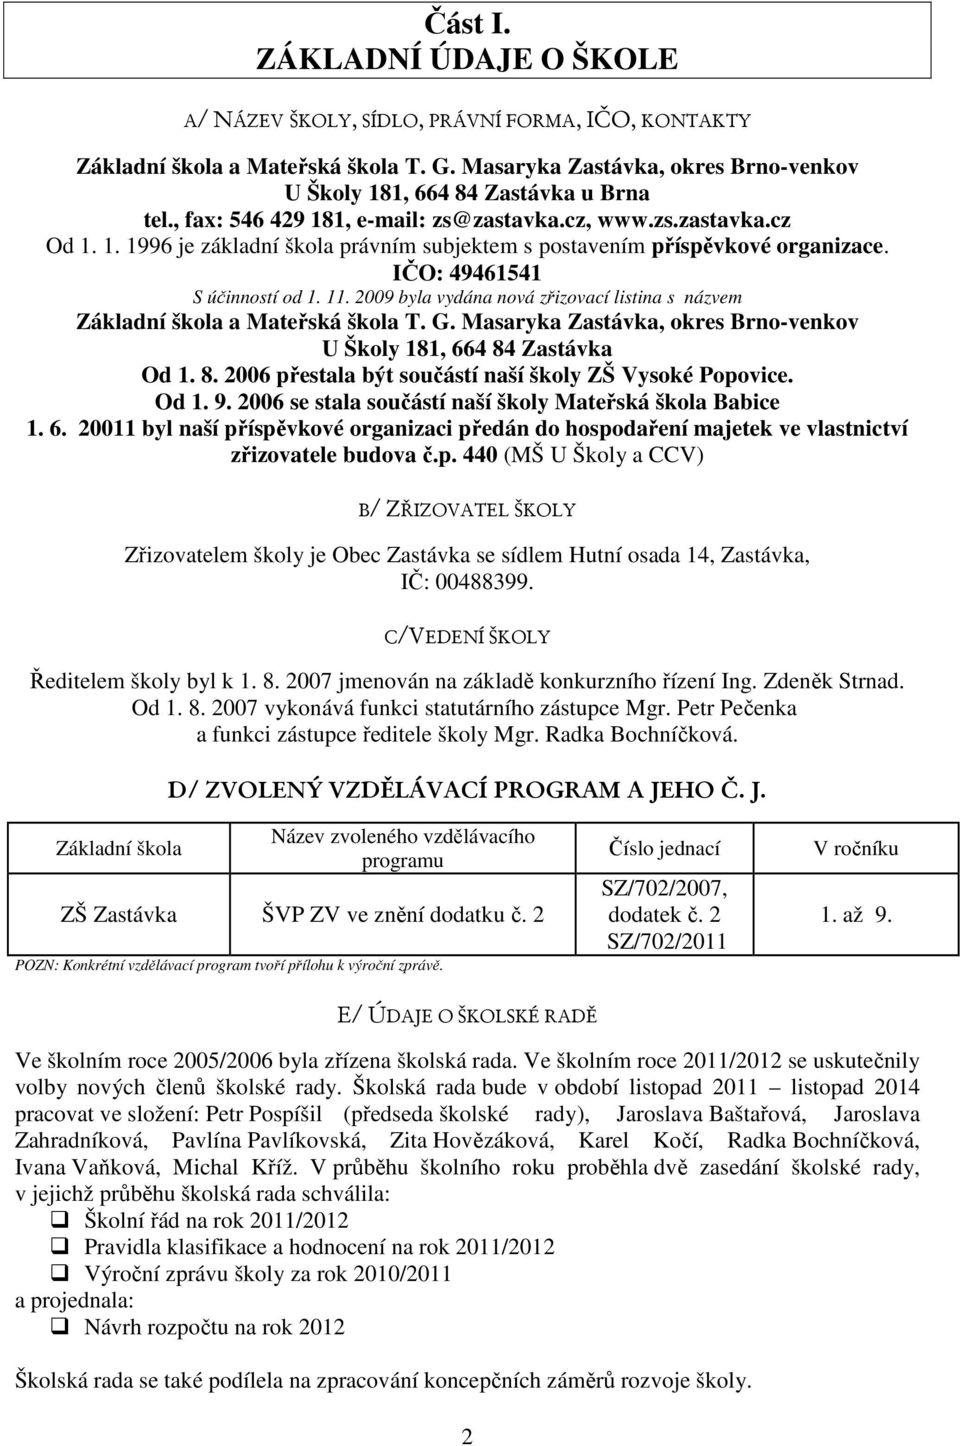 2009 byla vydána nová zřizovací listina s názvem Základní škola a Mateřská škola T. G. Masaryka Zastávka, okres Brno-venkov U Školy 181, 664 84